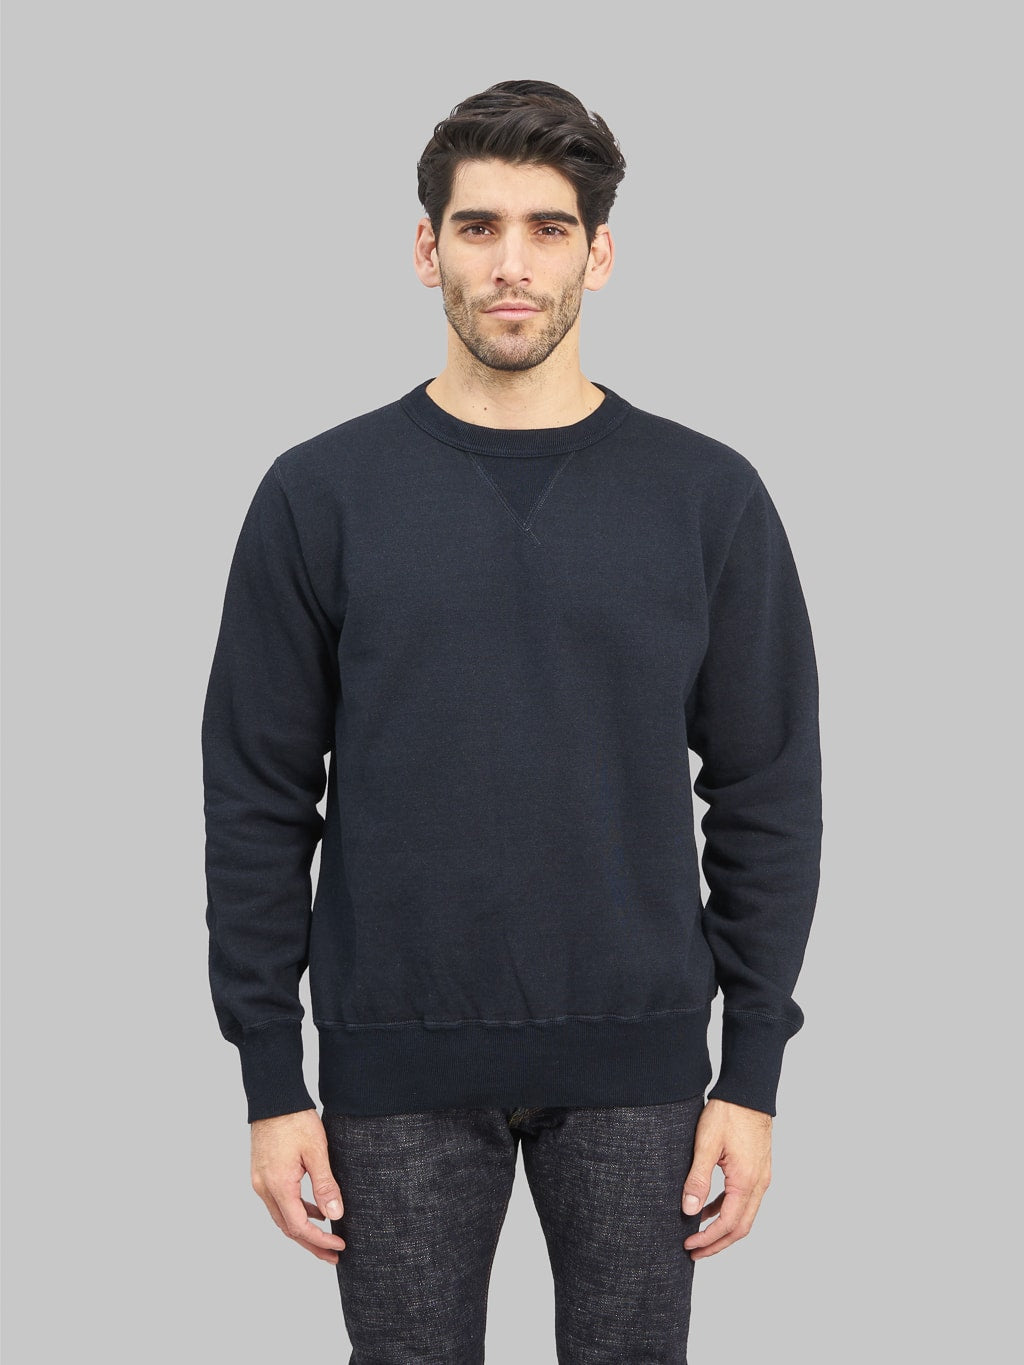 studio dartisan aishibu dyed indigo sweatshirt model front fit